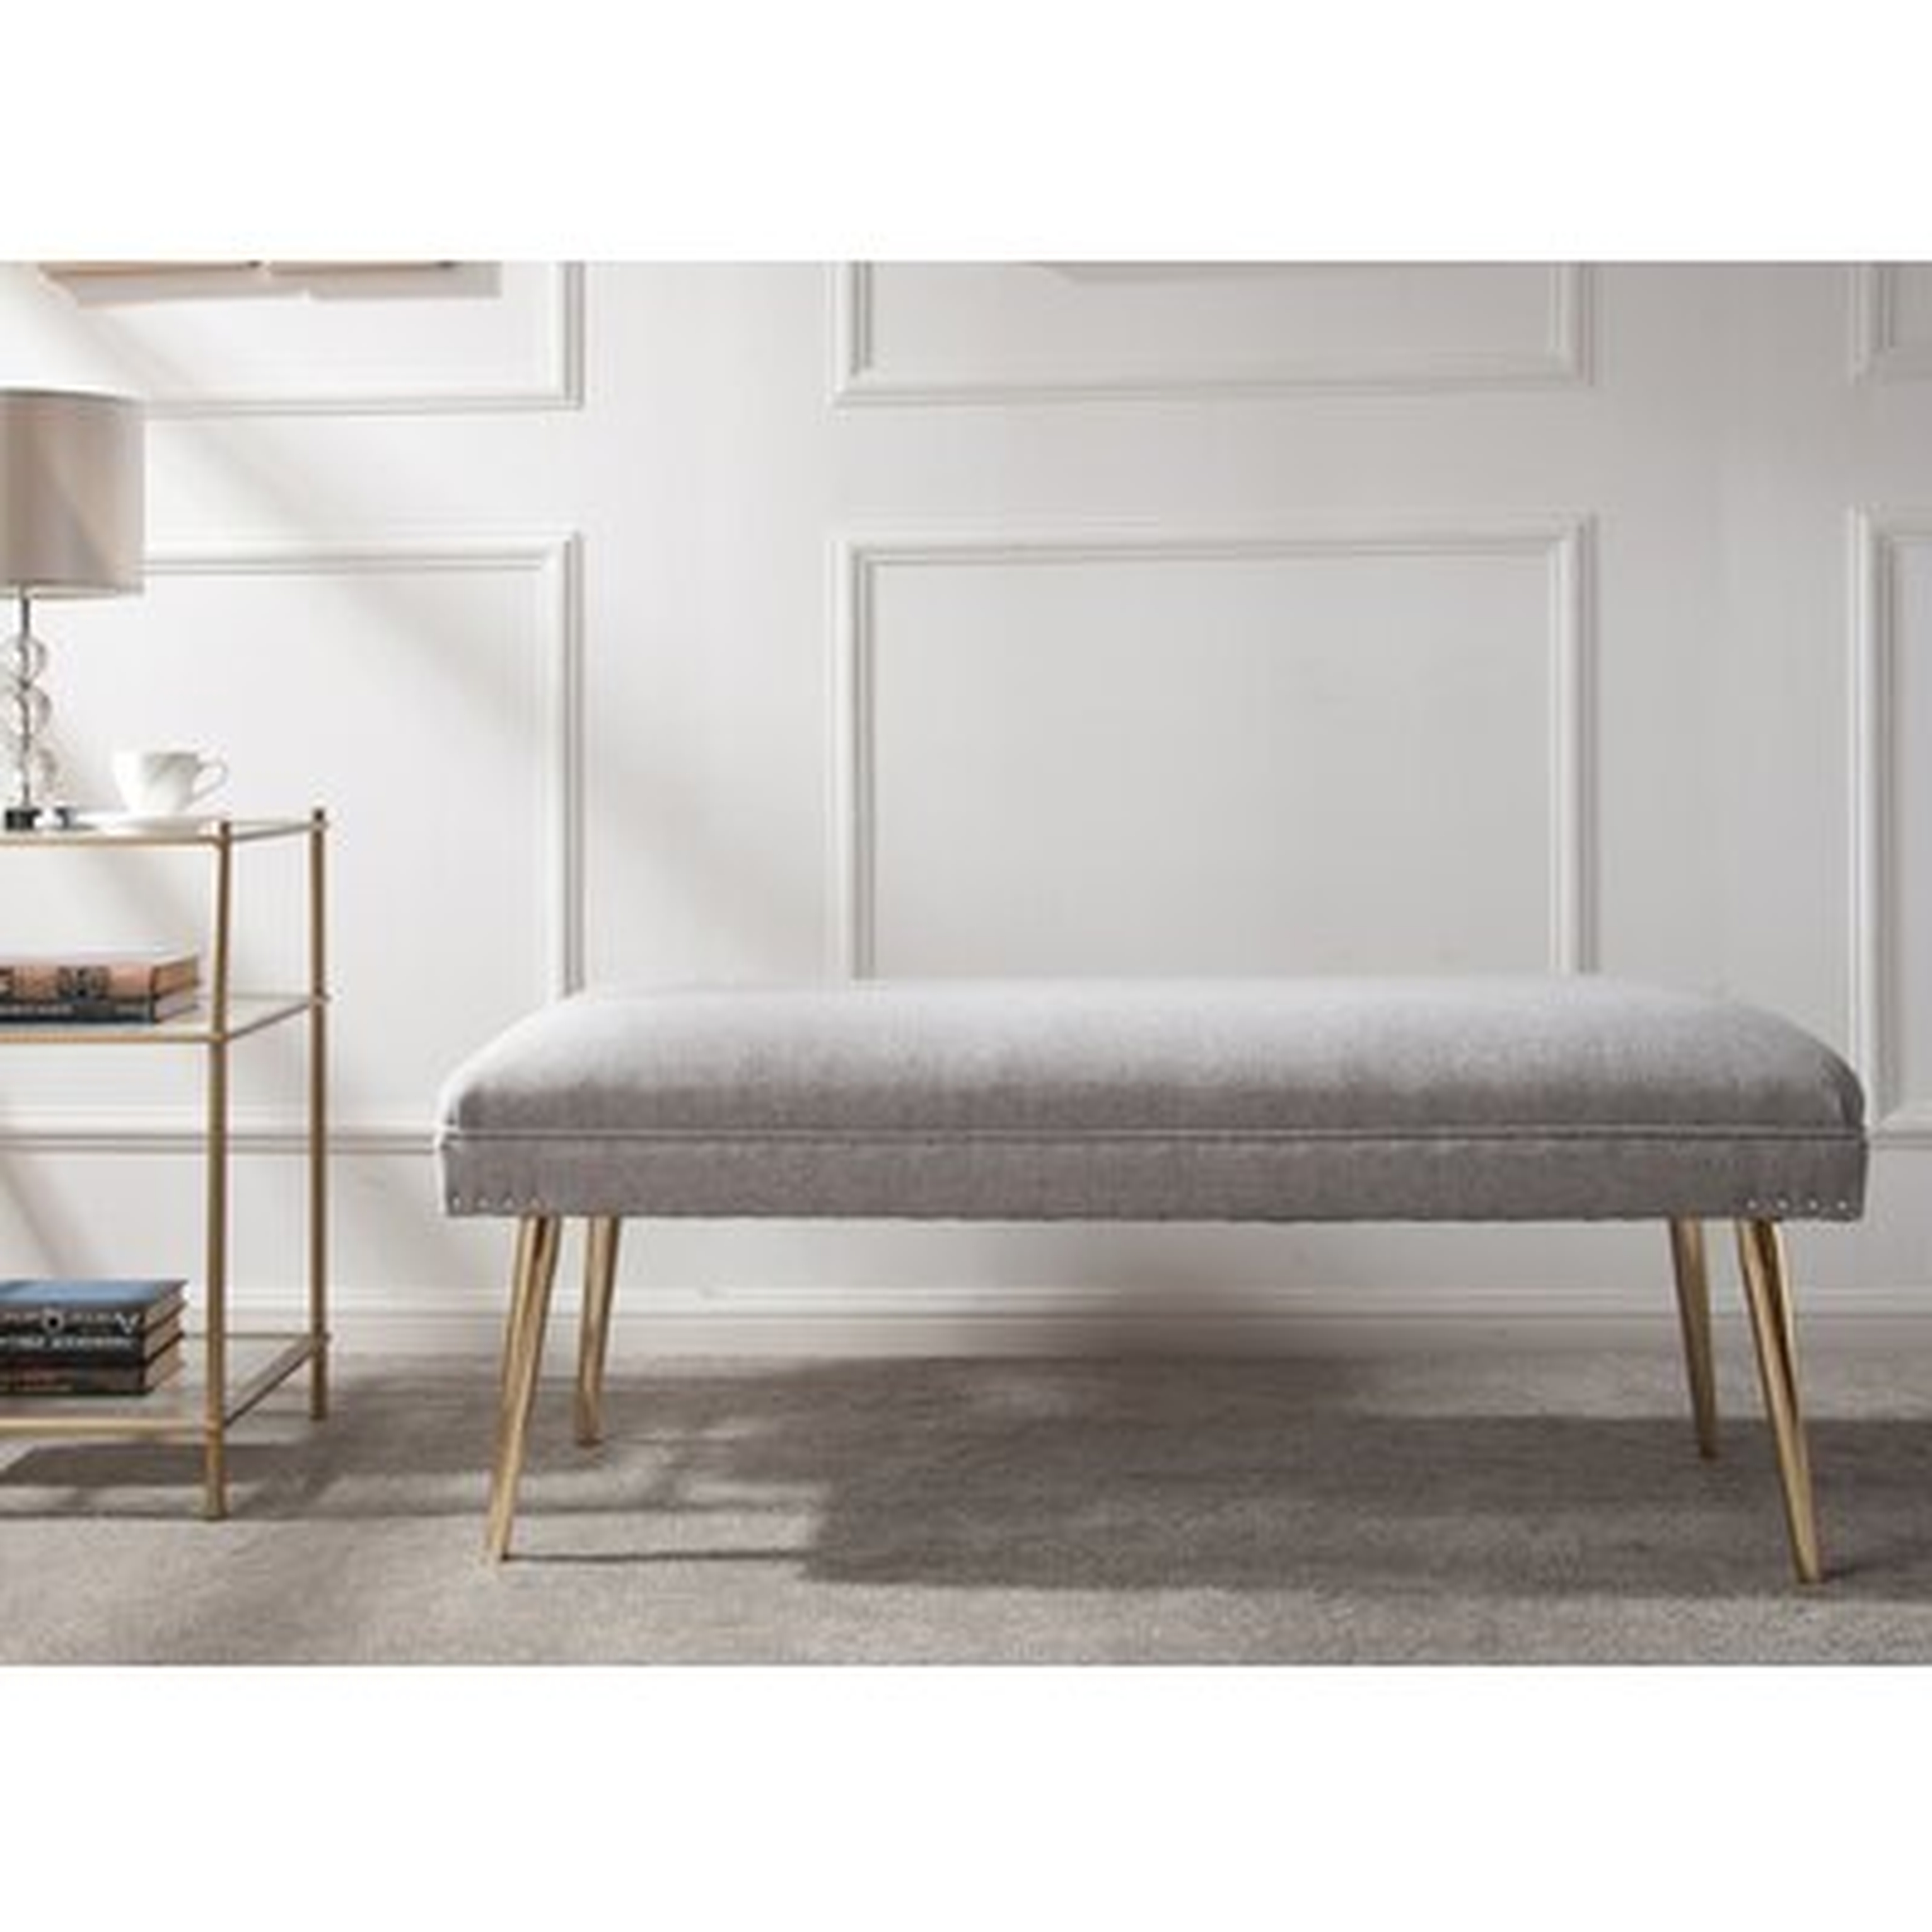 Sunni Upholstered Bench - Wayfair